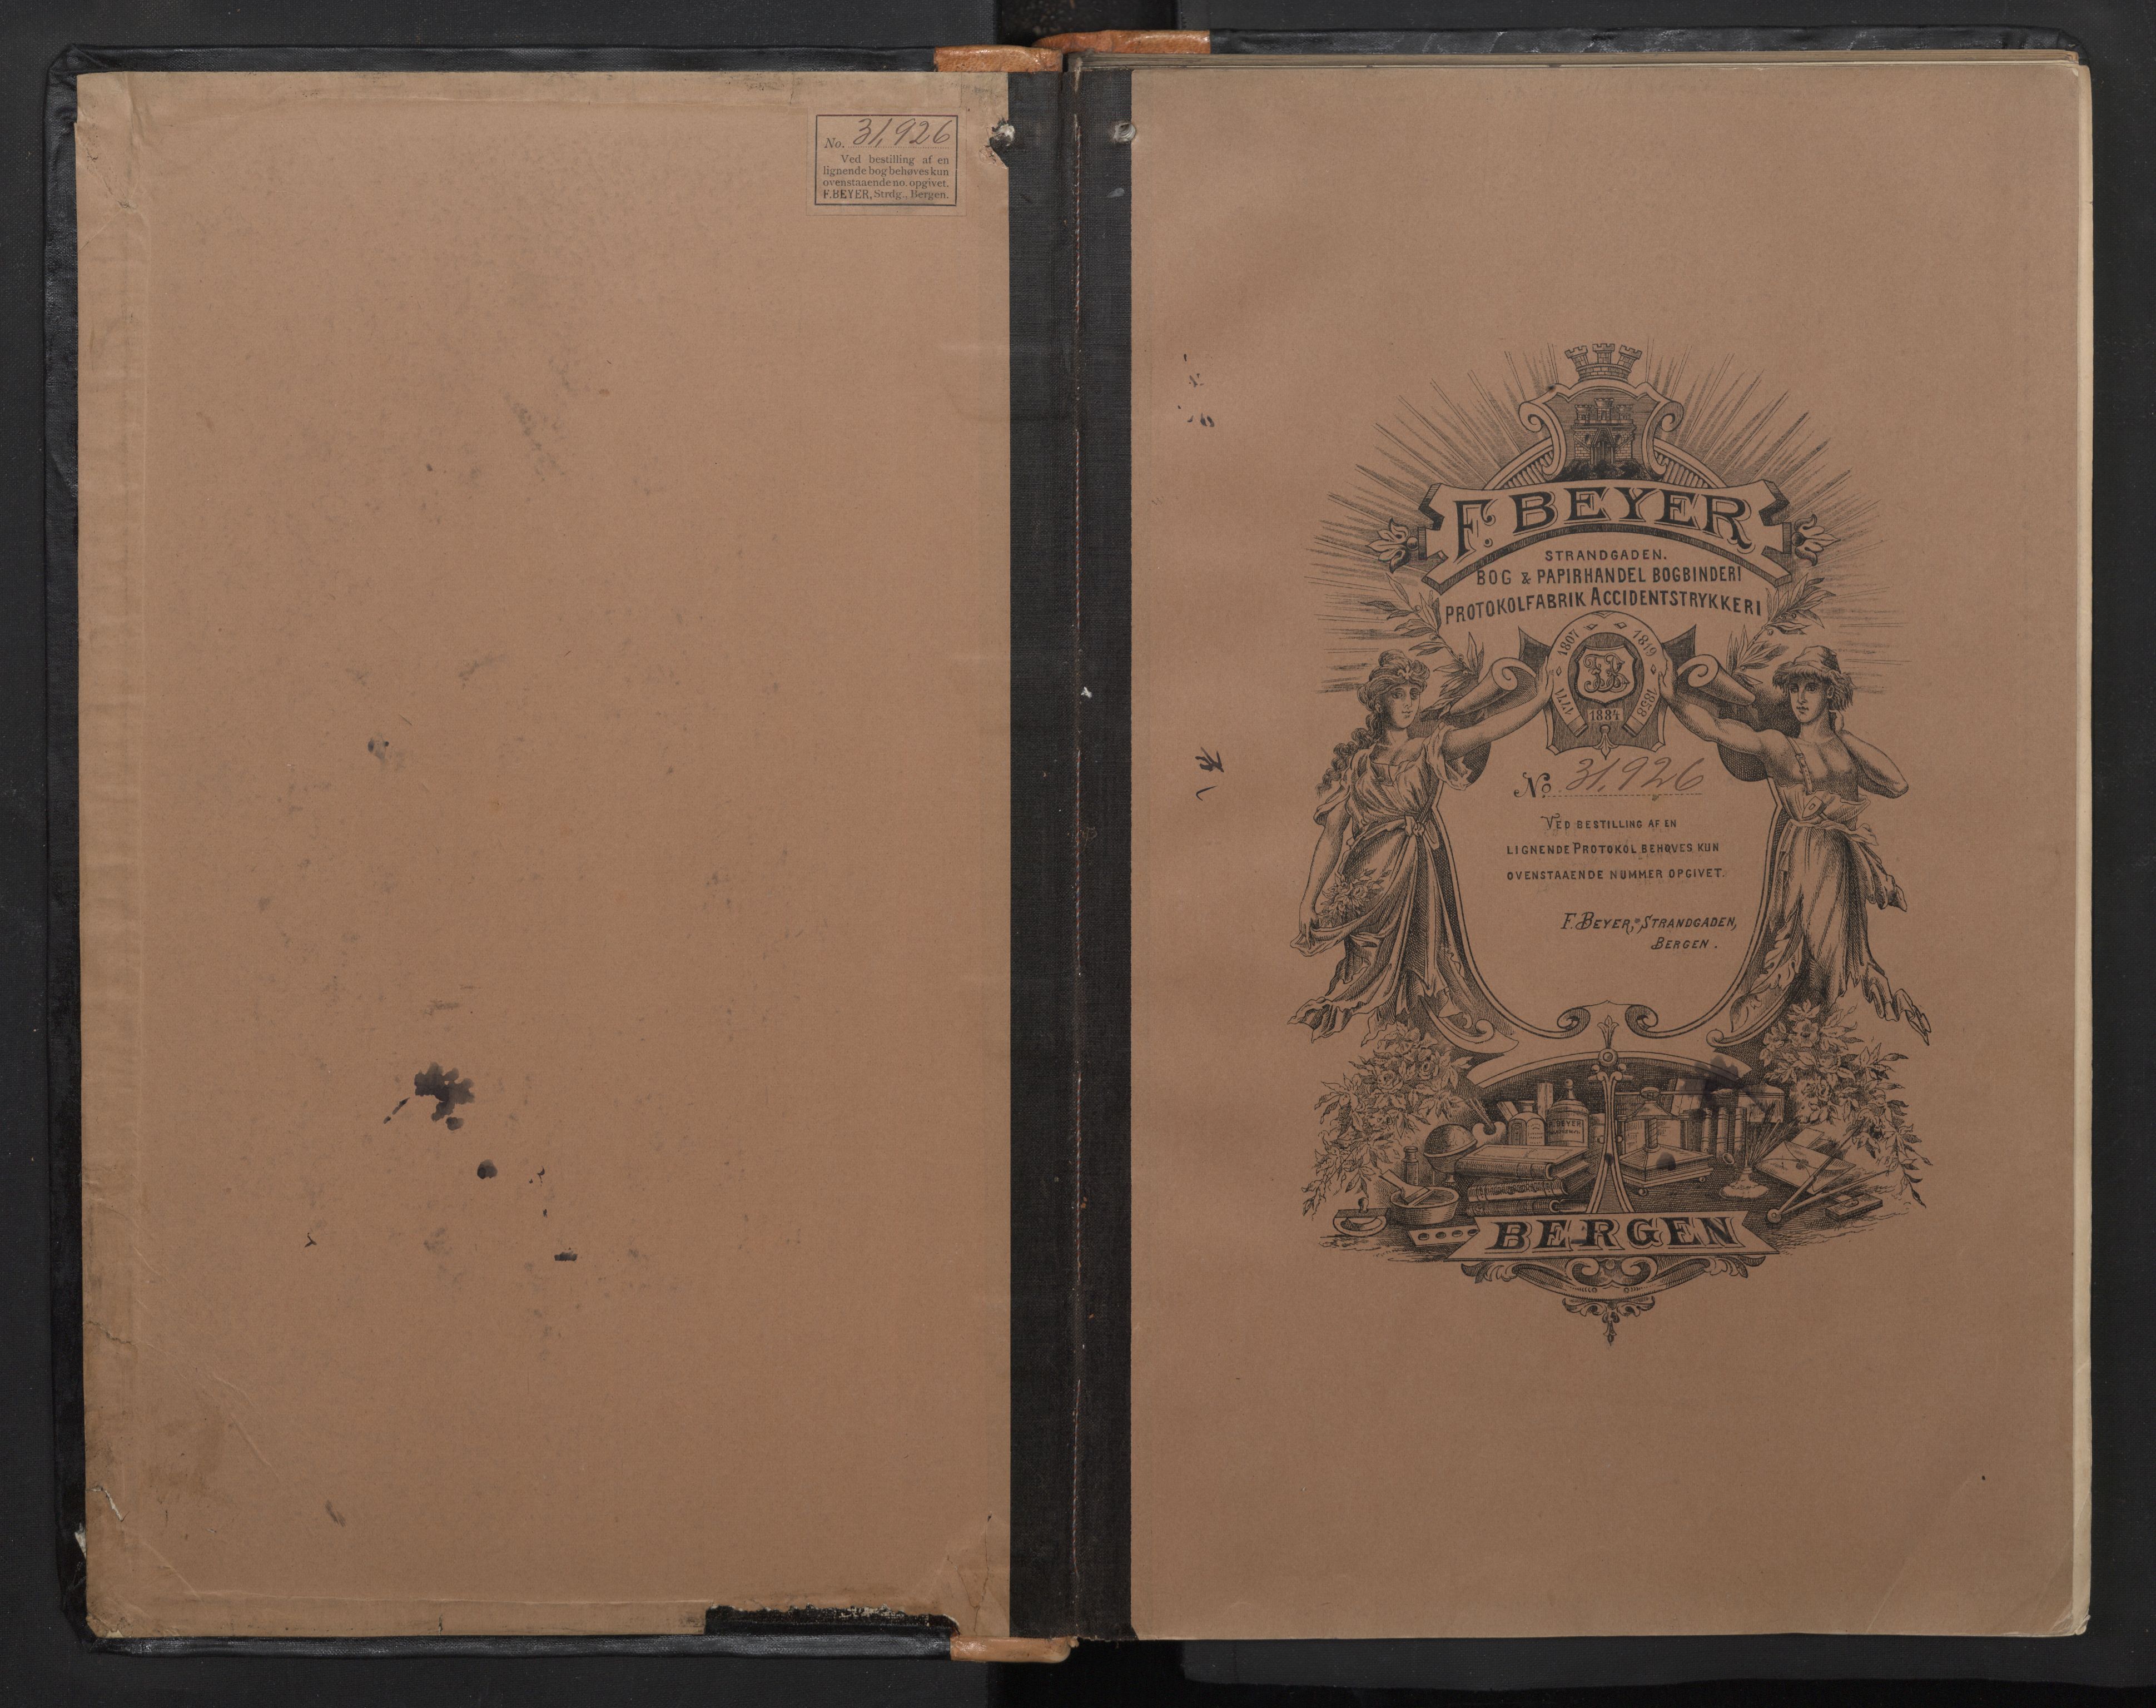 Arkivreferanse mangler*, SAB/-: Ministerialbok nr. A 1, 1912-1957